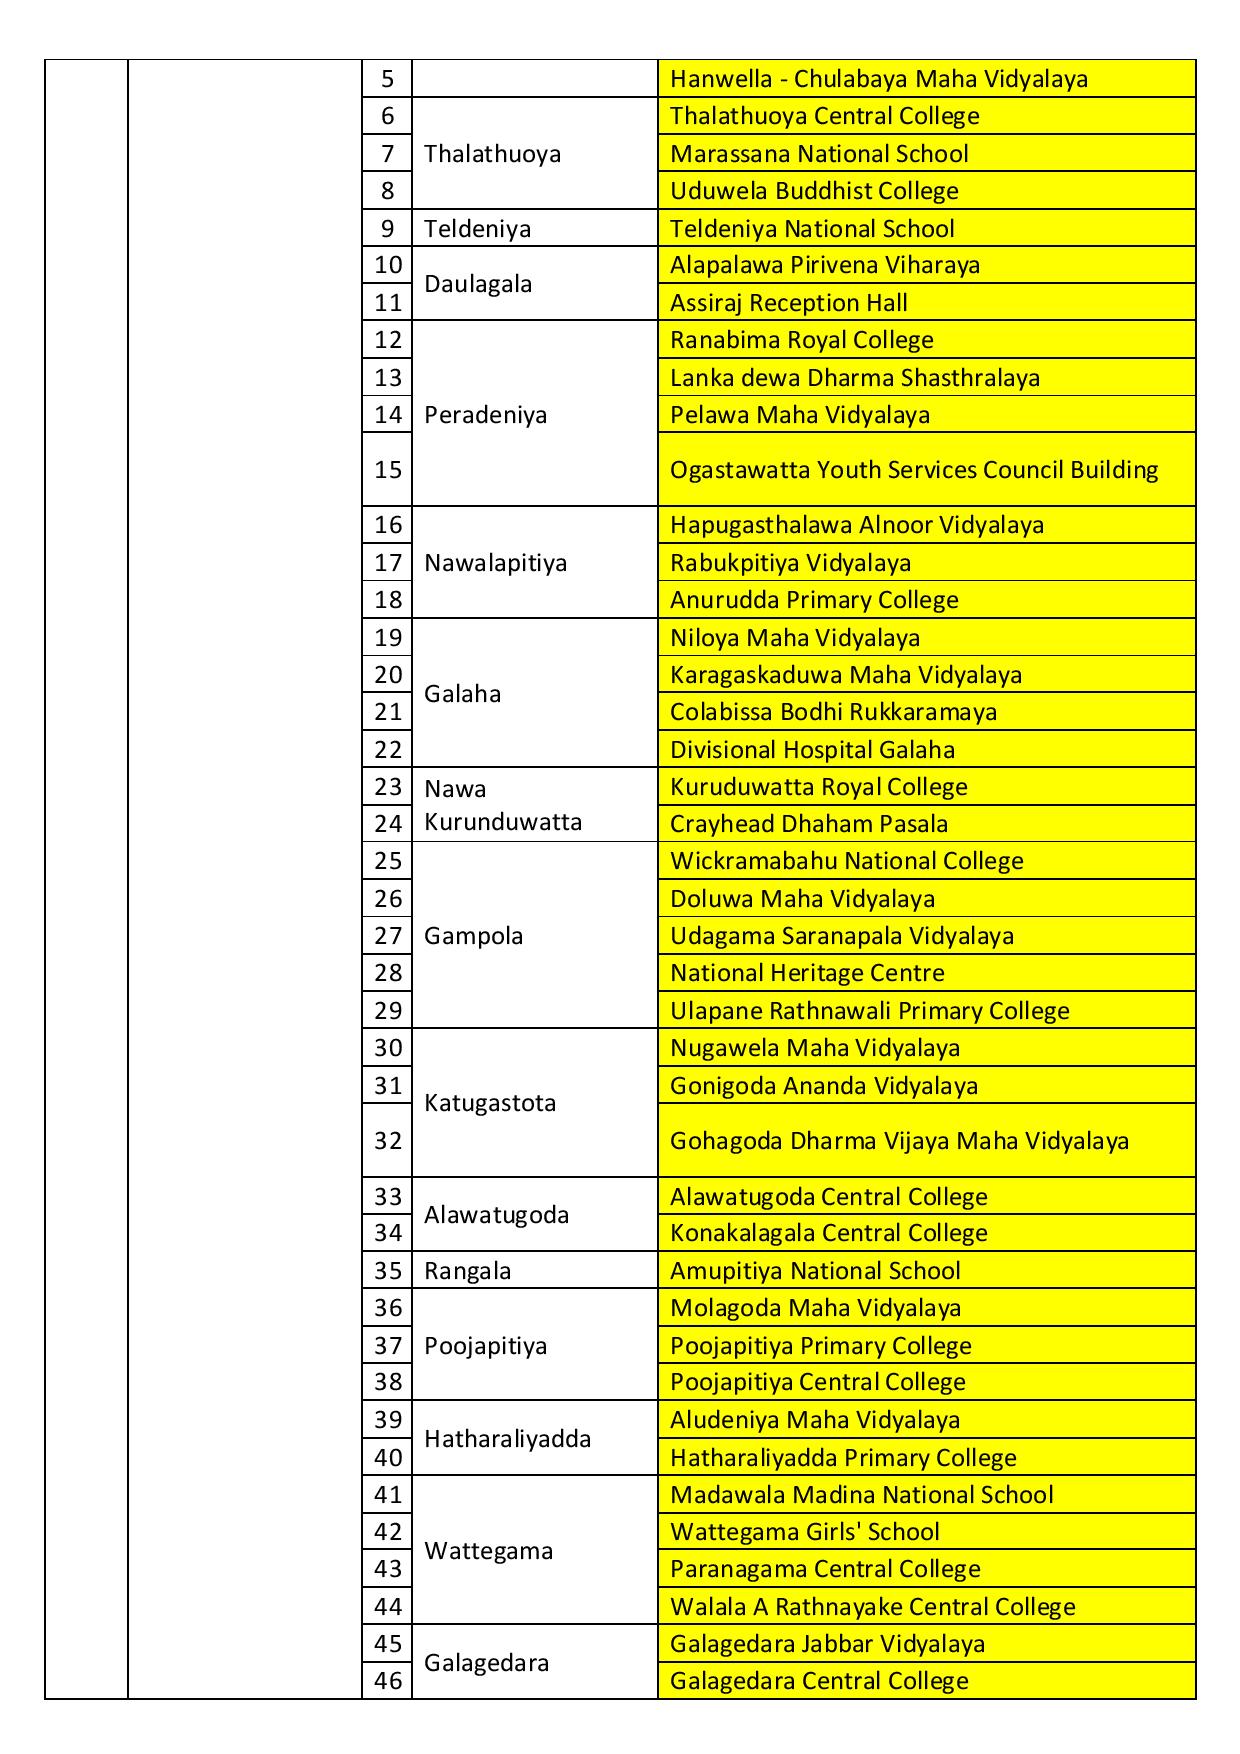 d7d2d20d vaccination schedule on 20.07.2021 tuesday copy page 003